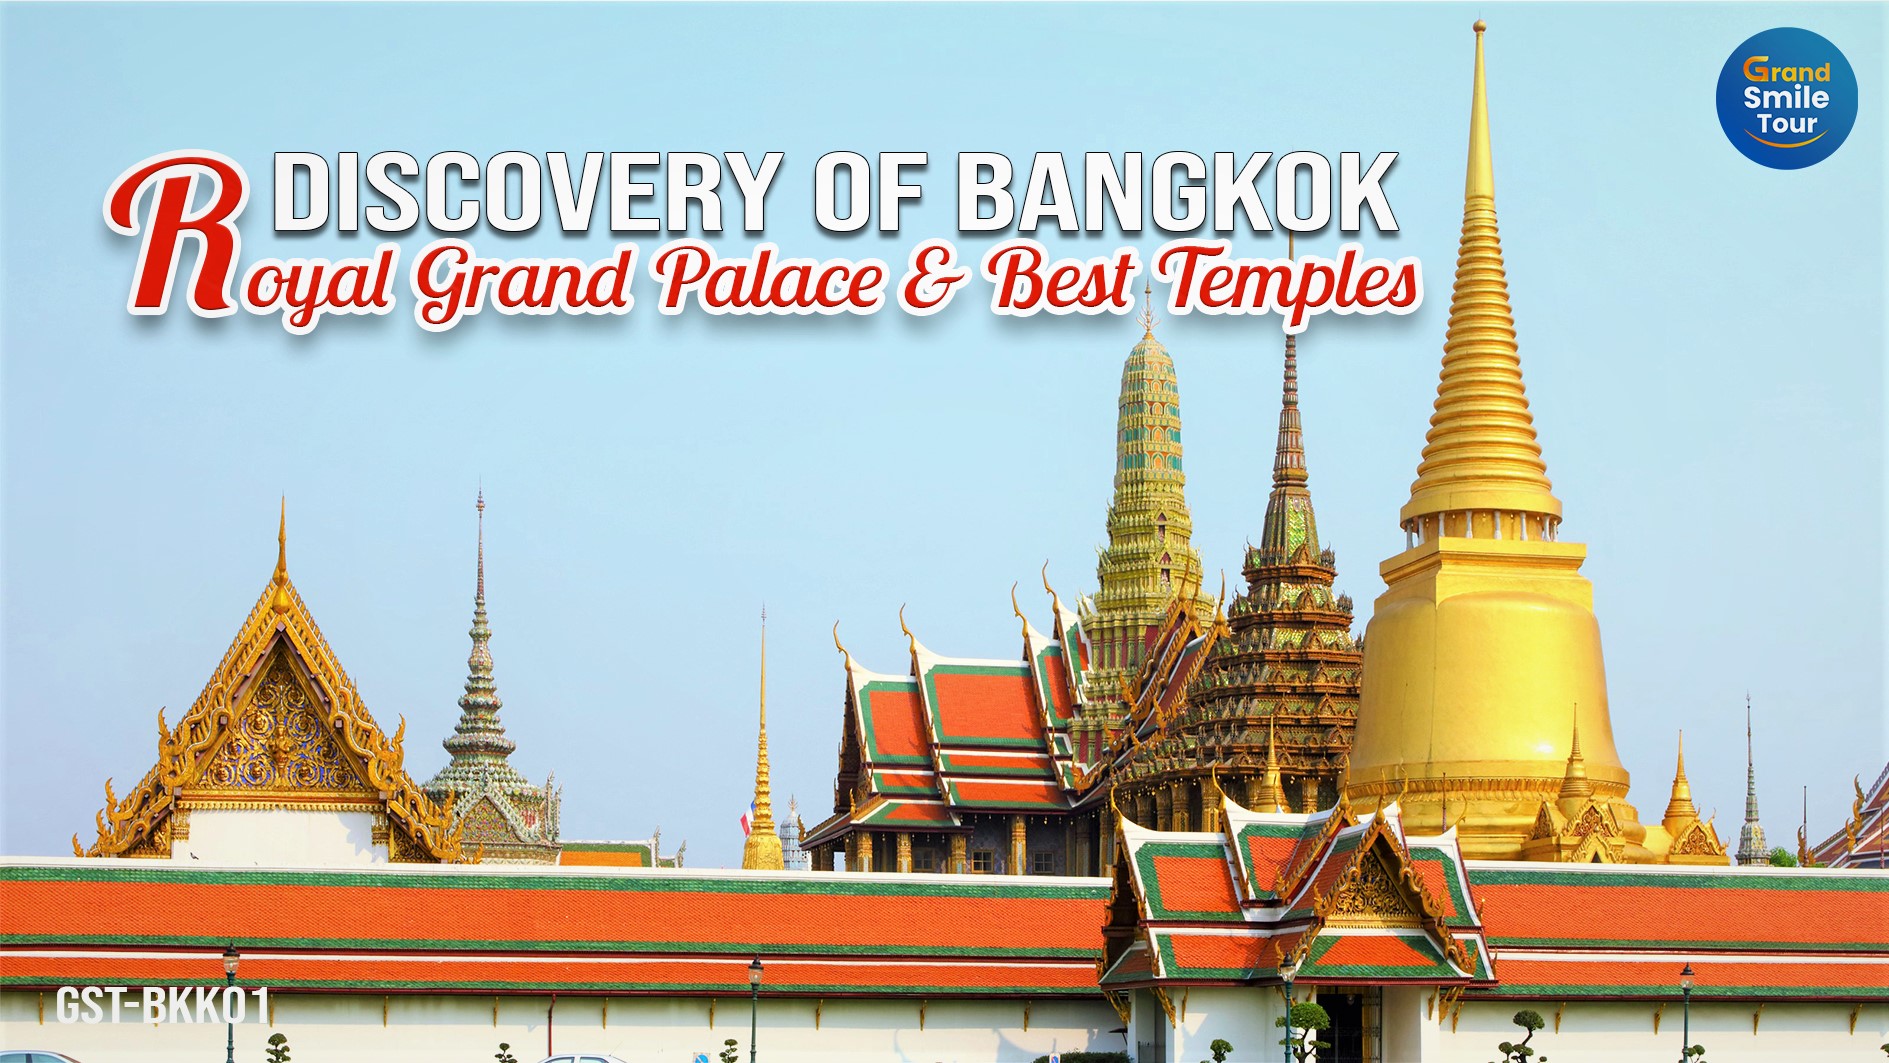 GST-BKK02 Royal Grand Palace _ Best Temples